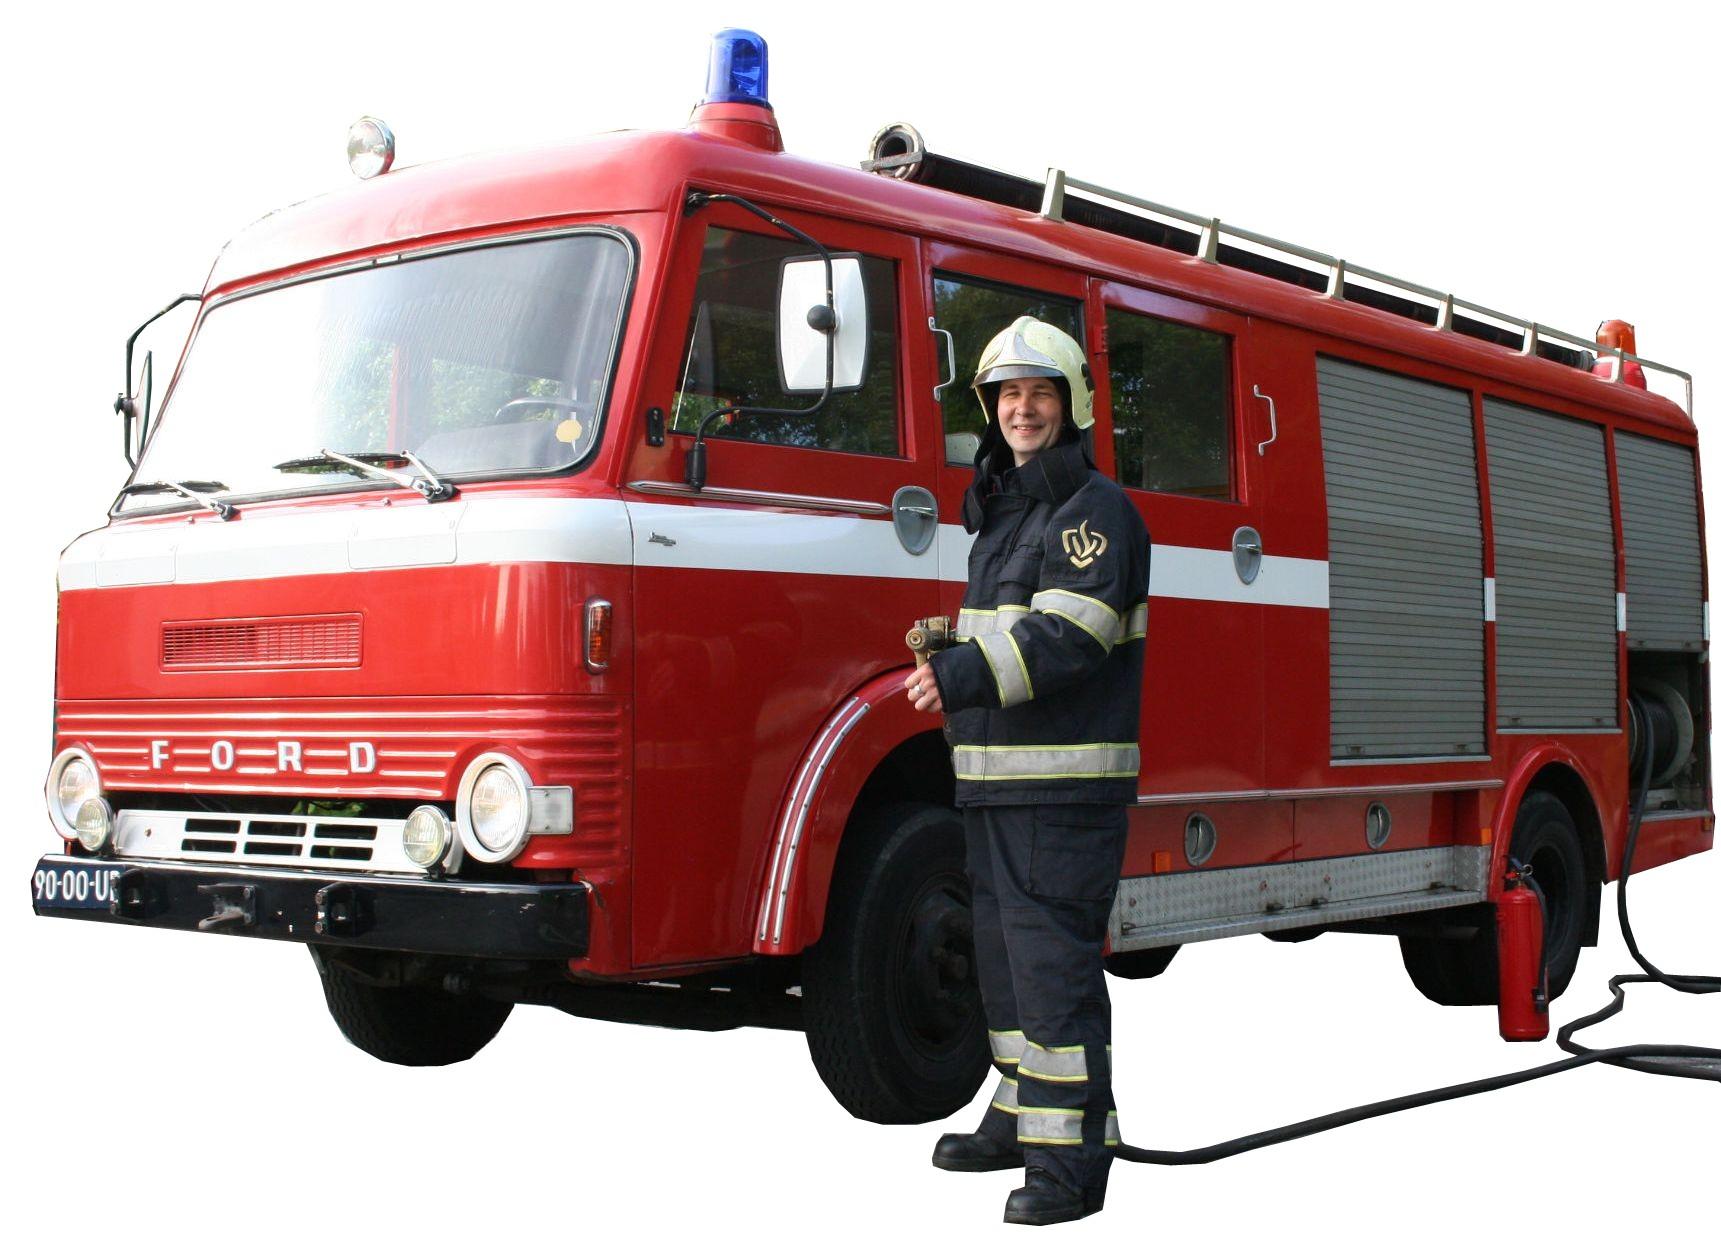 Verslag Uitje Met Brandweerauto